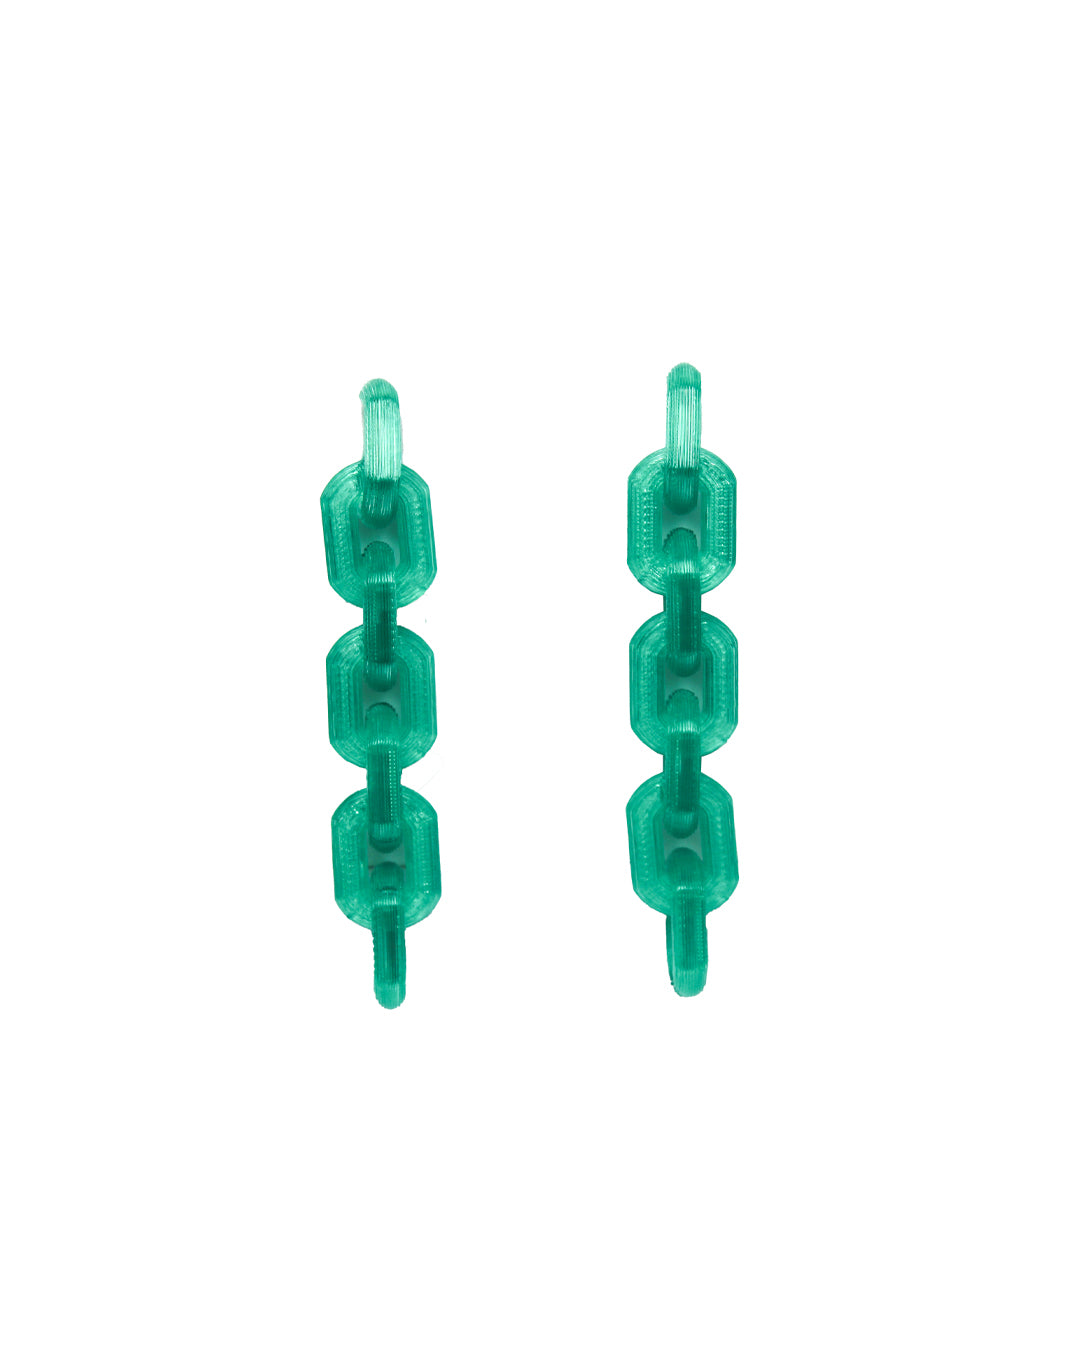 Handmade bio plastic colorful chain earrings - Rahrah